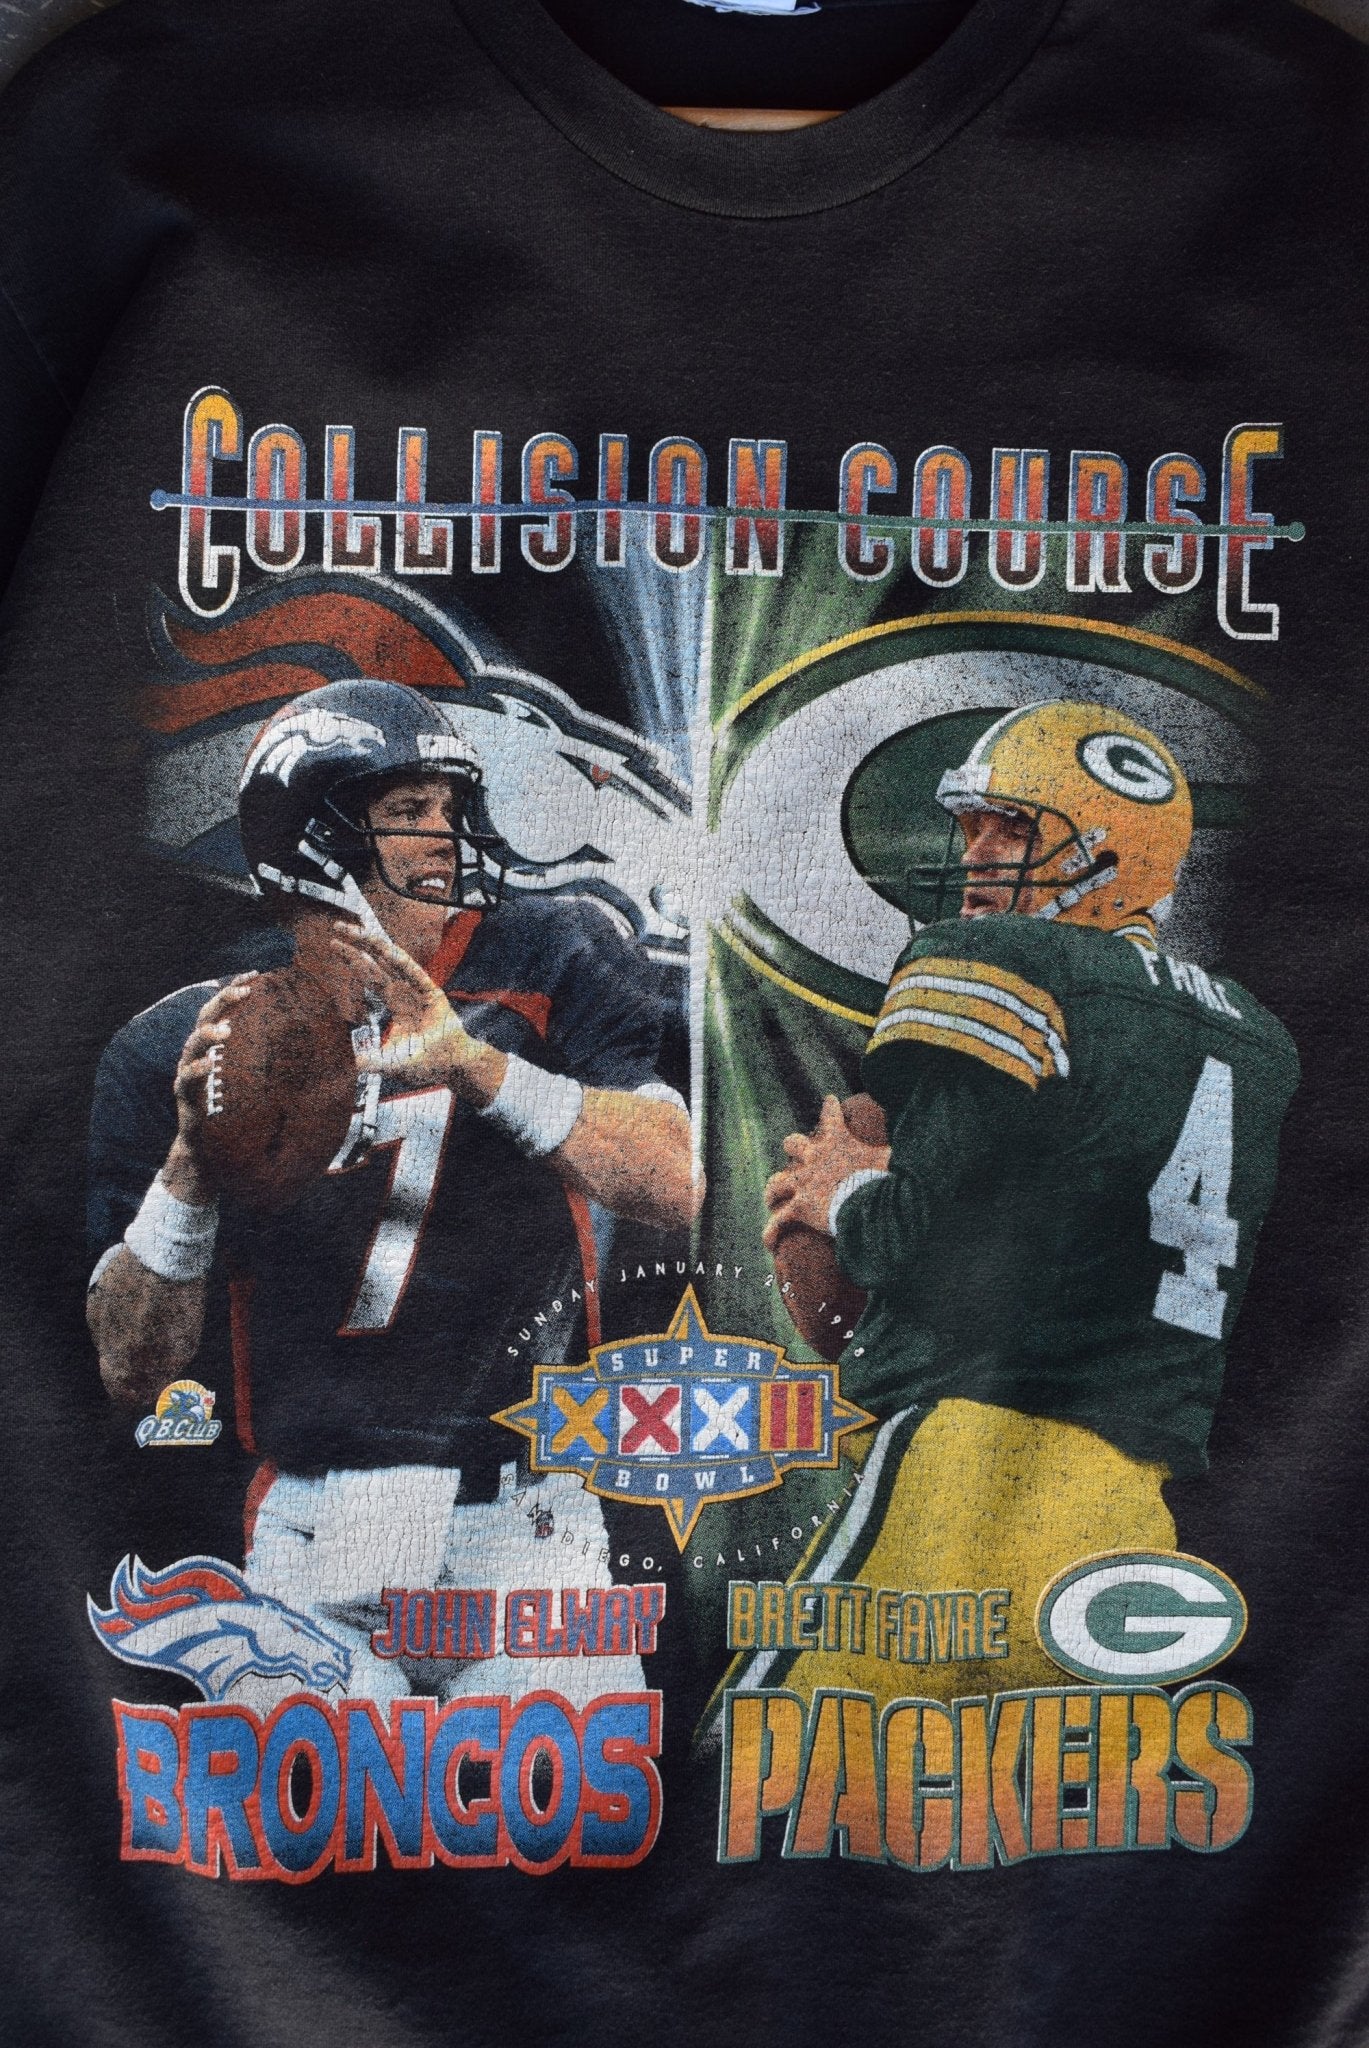 Vintage 1998 Starter x NFL Packers vs Broncos Superbowl XXXII Tee (L) - Retrospective Store